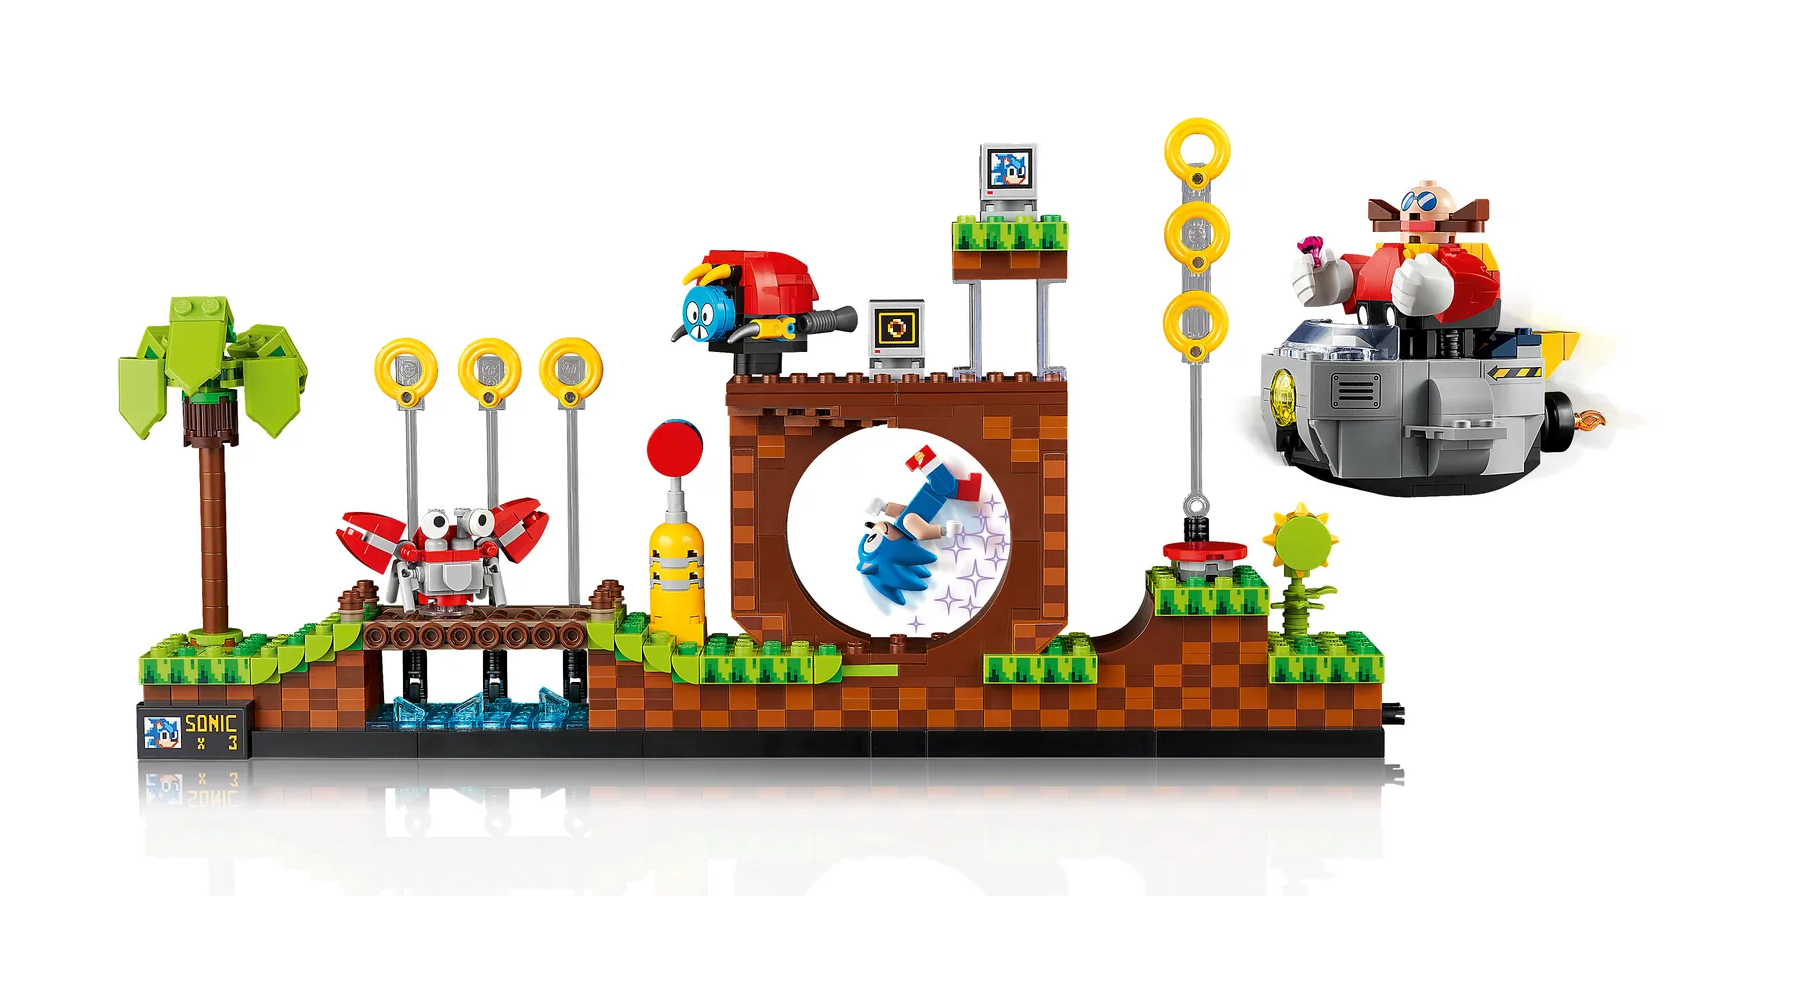 LEGO® Sonic the Hedgehog Sets - Announce Trailer 